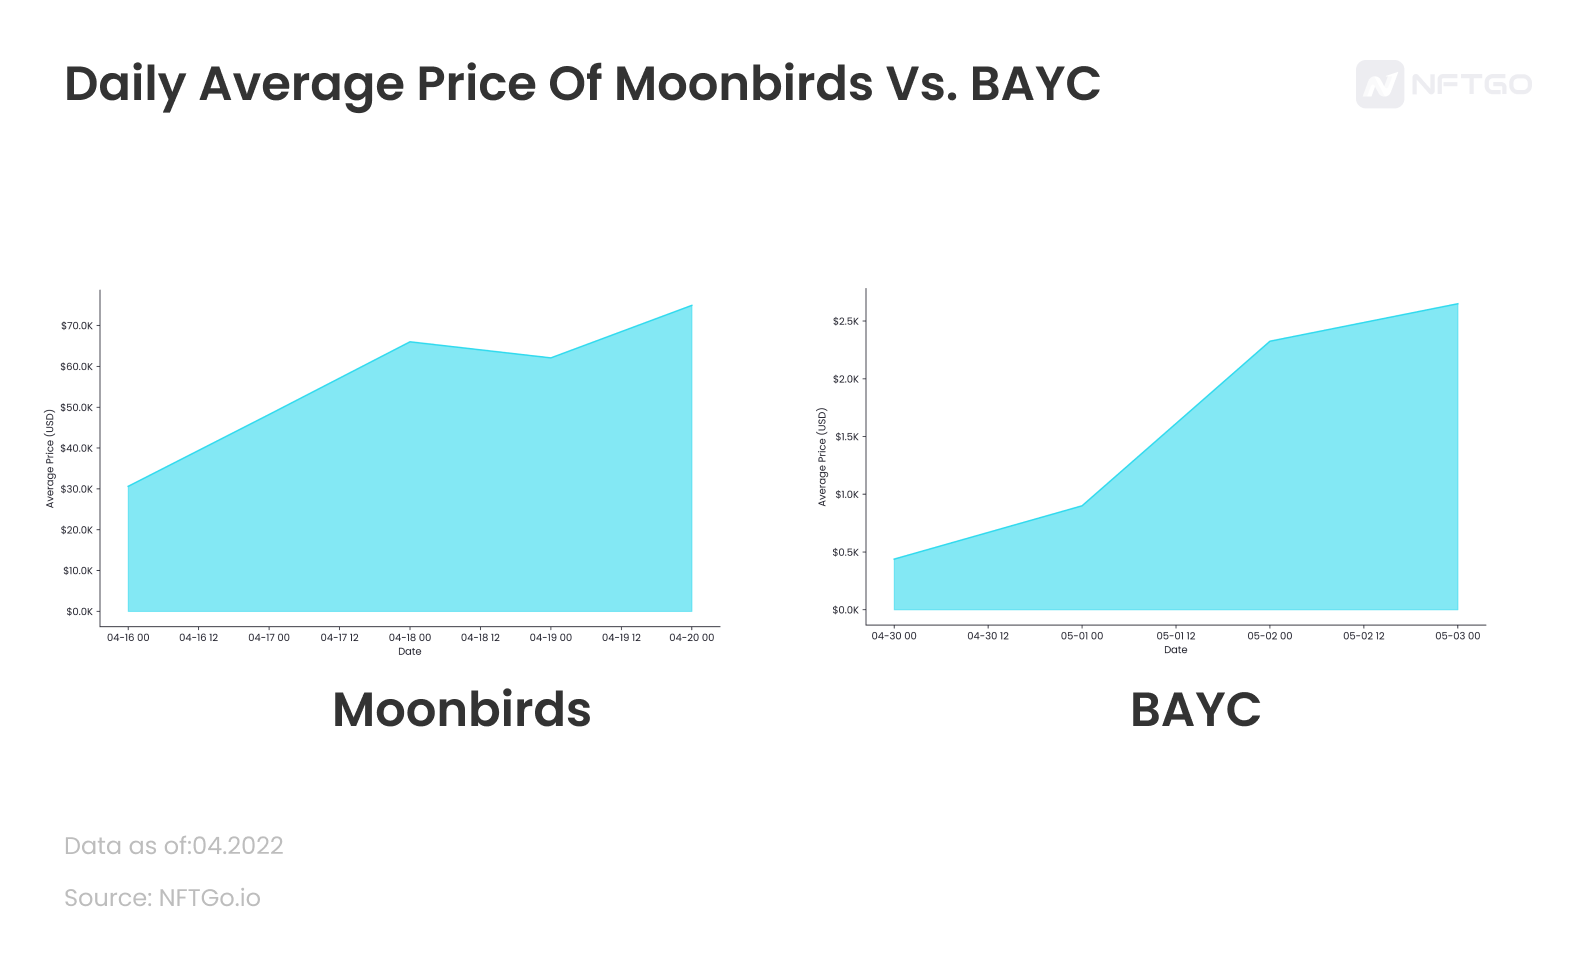 Daily Average Price Of Moonbirds Vs. BAYC (Data Source: NFTGo.io)